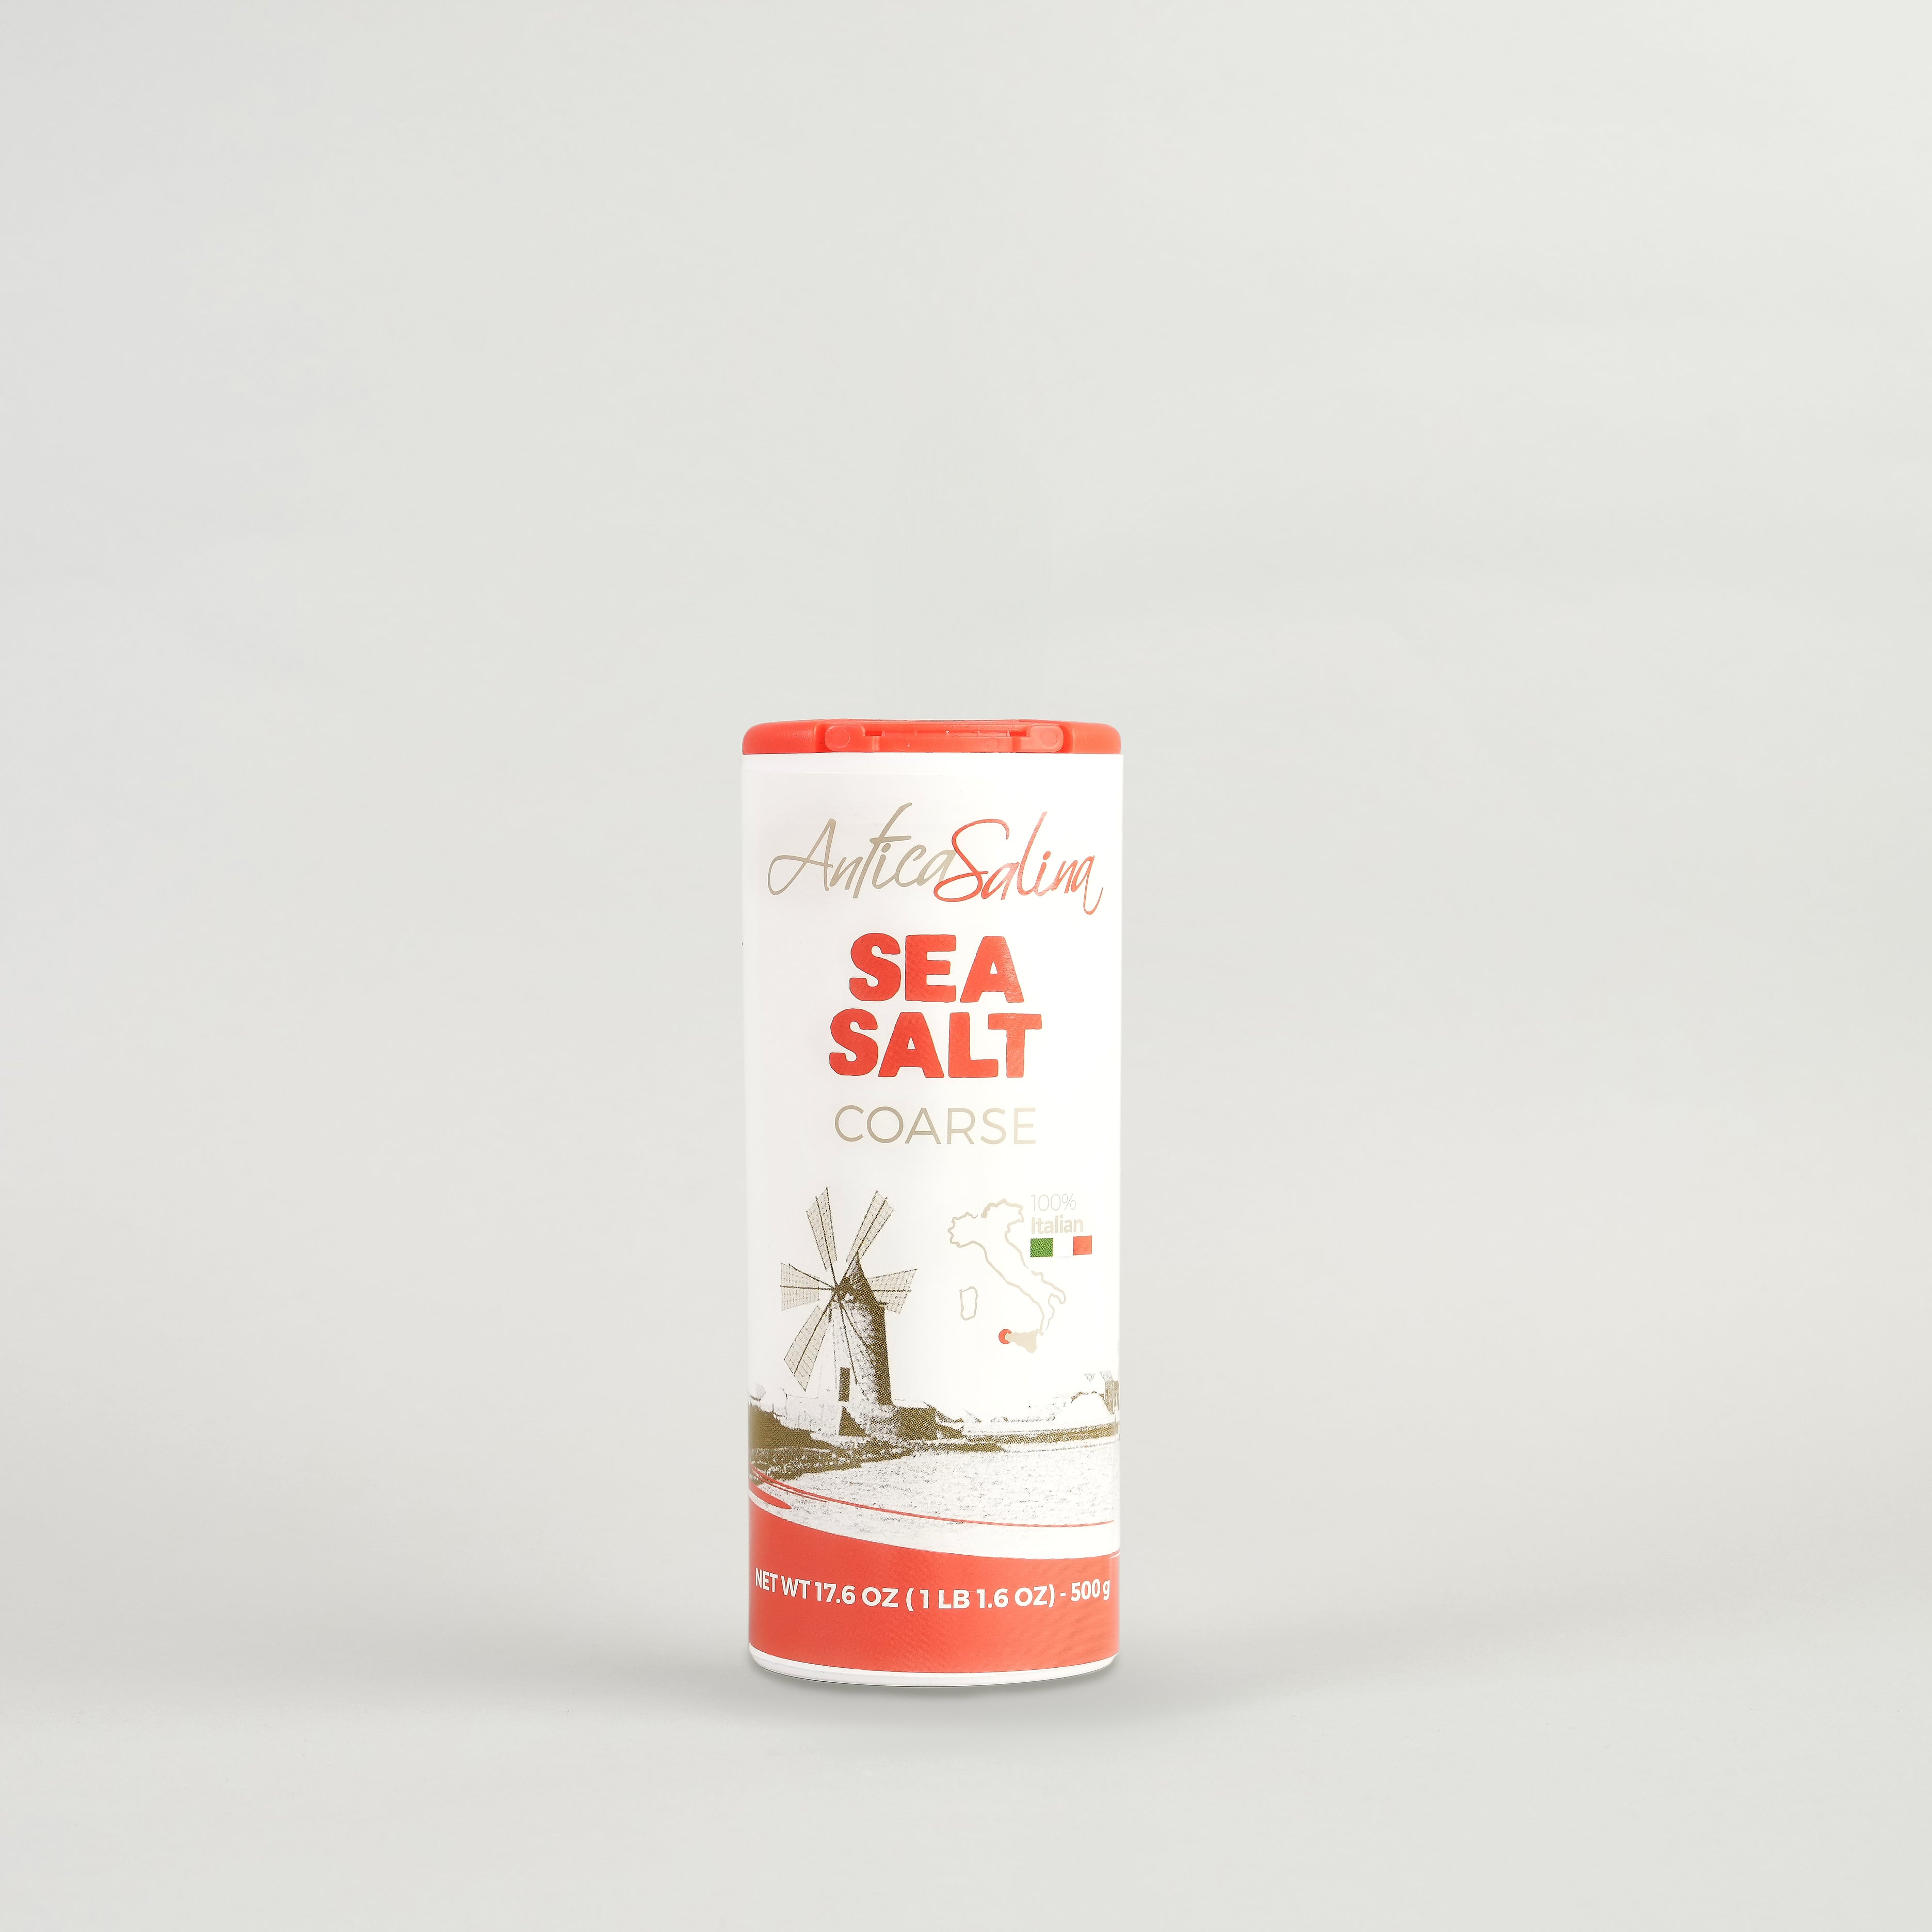 Antica Salina-Shaker Coarse Sea Salt 500g